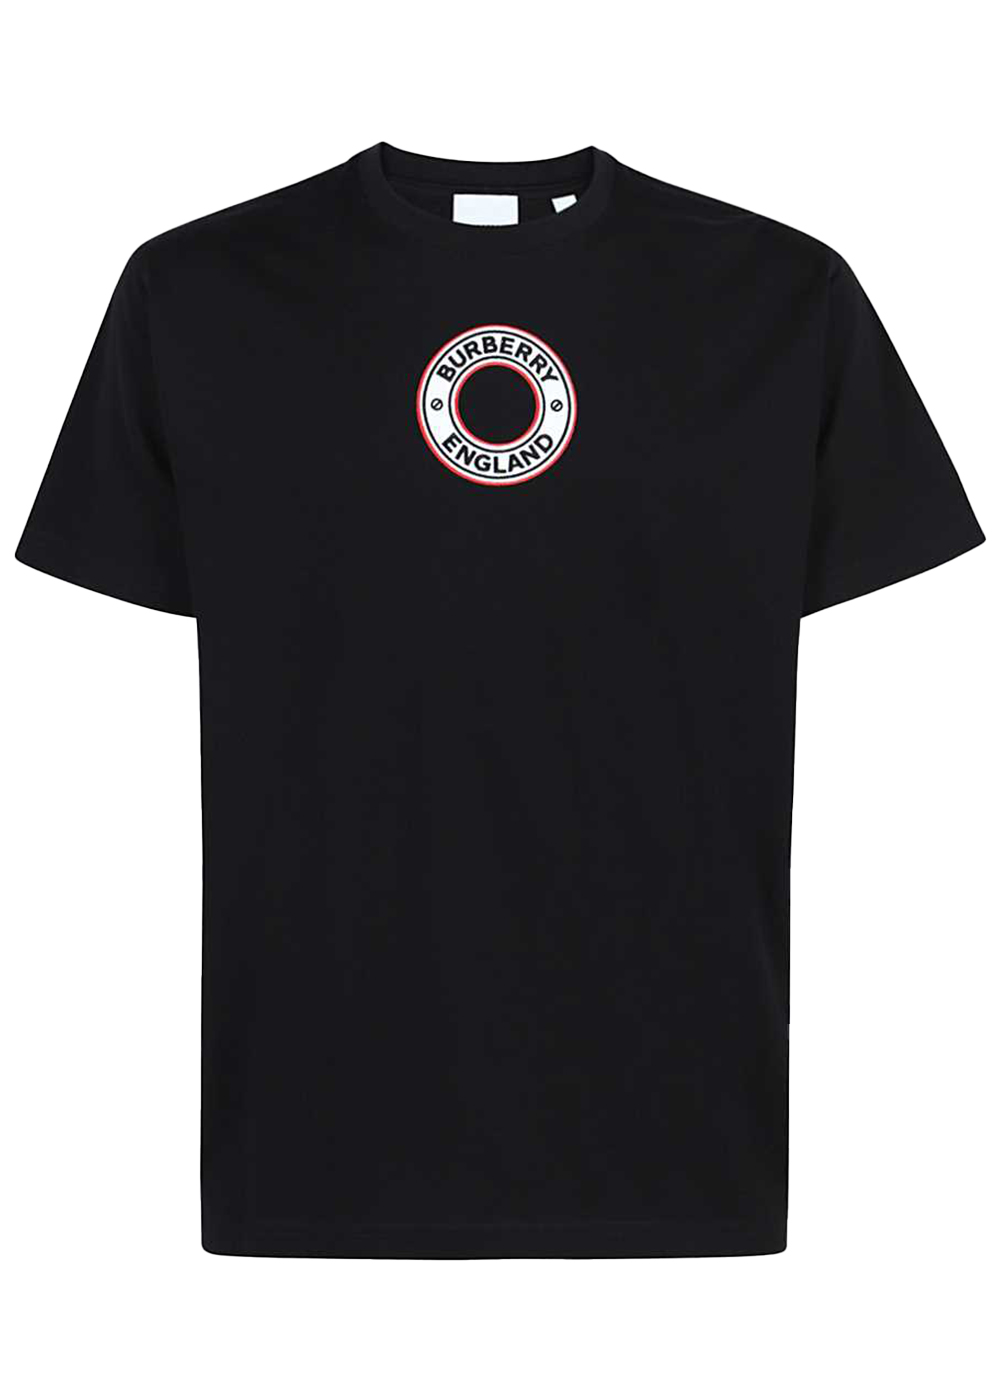 Burberry Archway Logo Applique T-Shirt Black White Red Men's - US